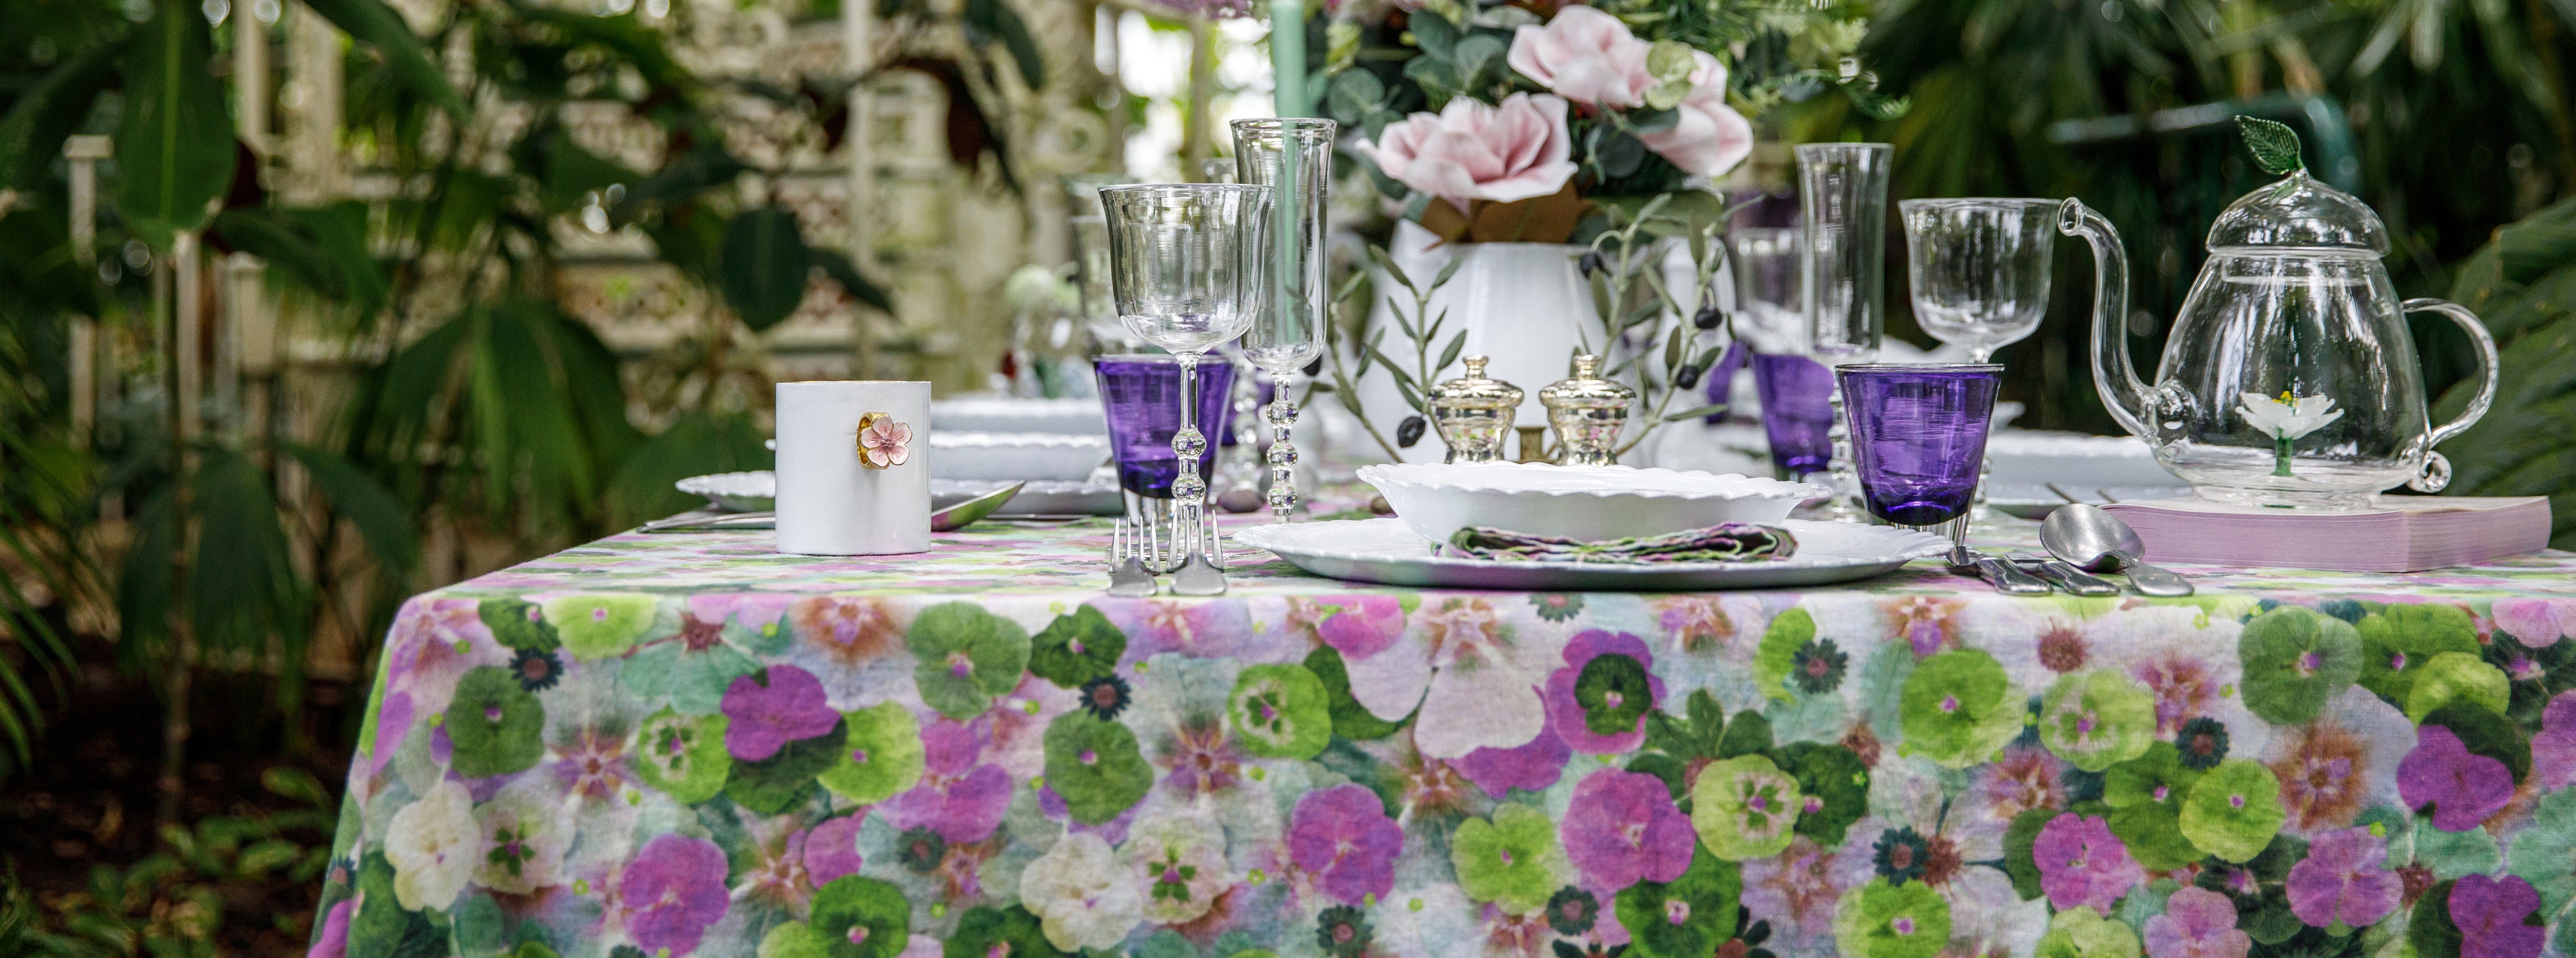 'Le Marché Aux Fleurs' Tablescape in Purple, Pink and Green